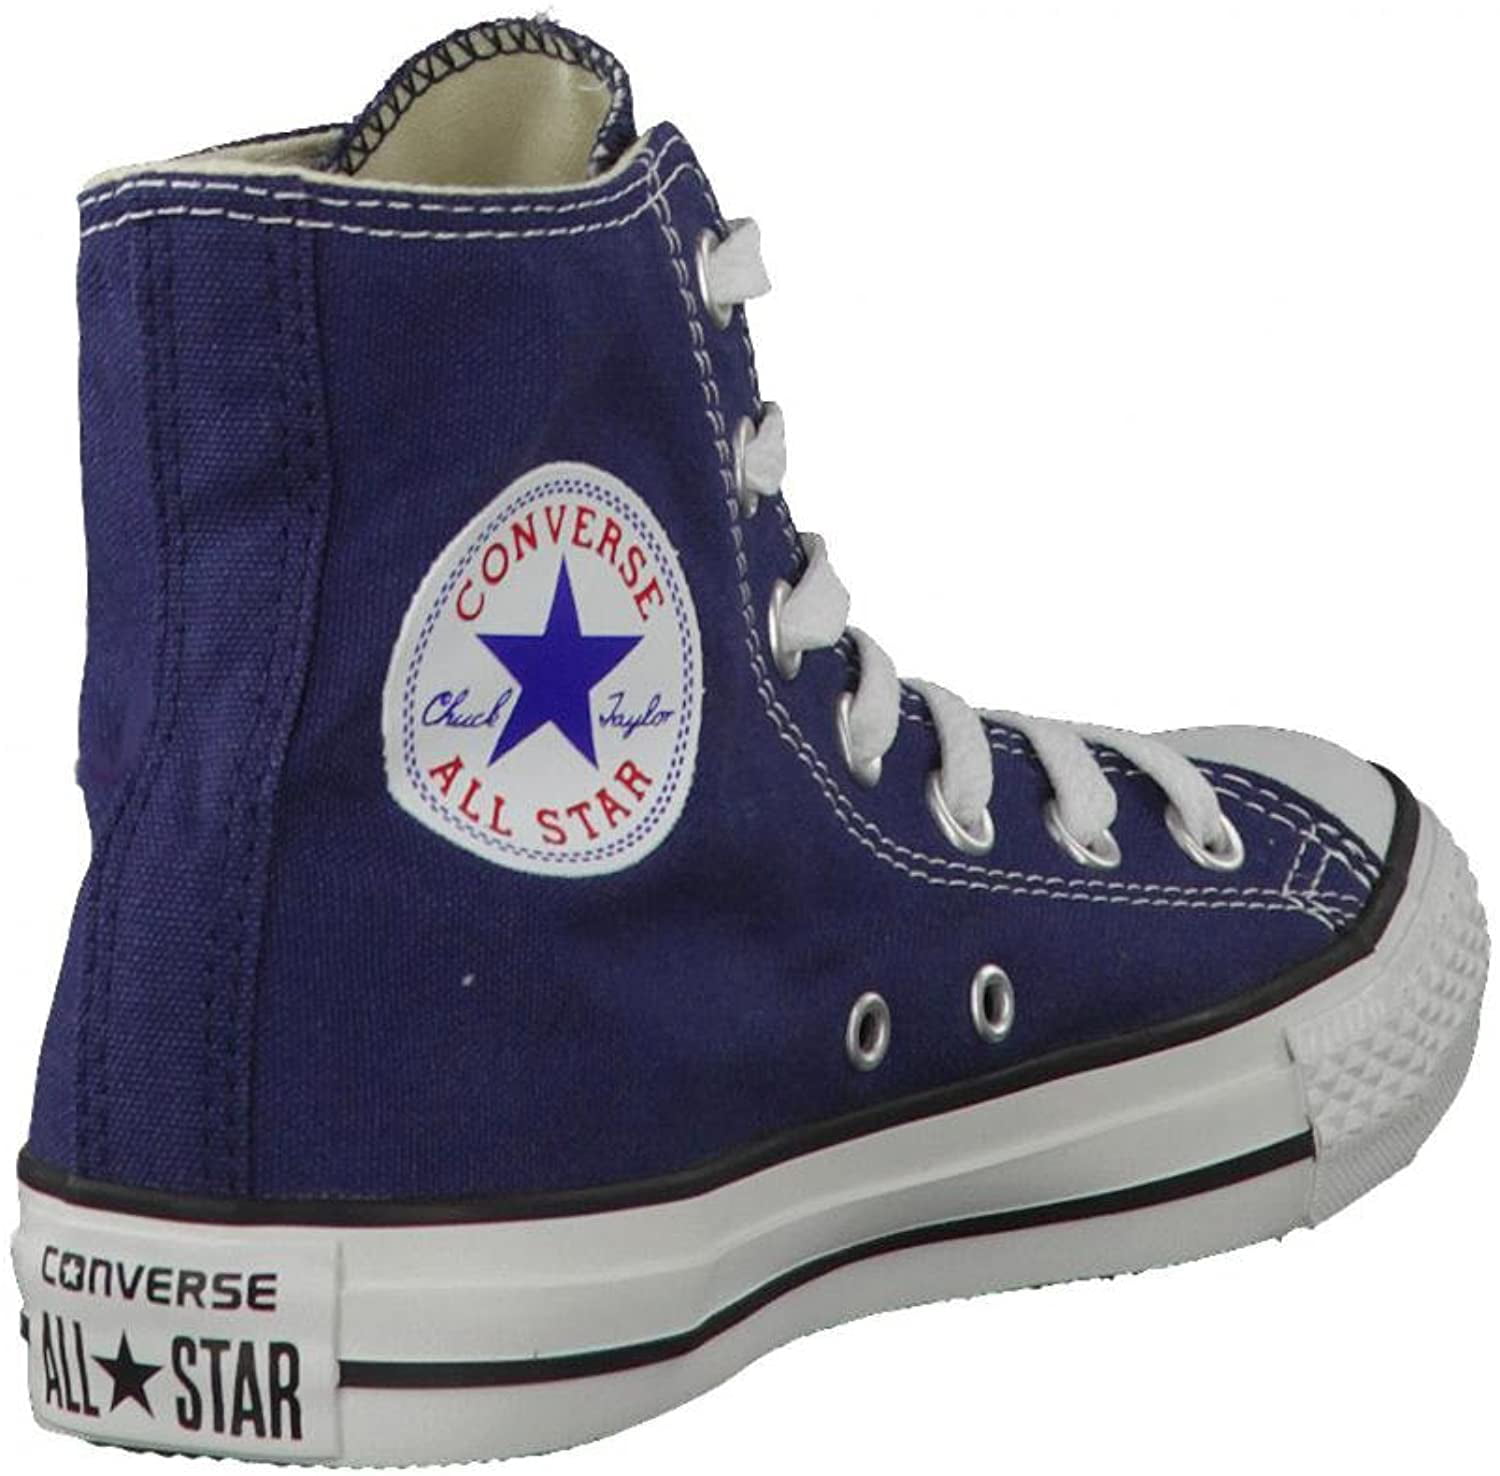 Converse Chuck Taylor All Star Hi Sneaker - Navy